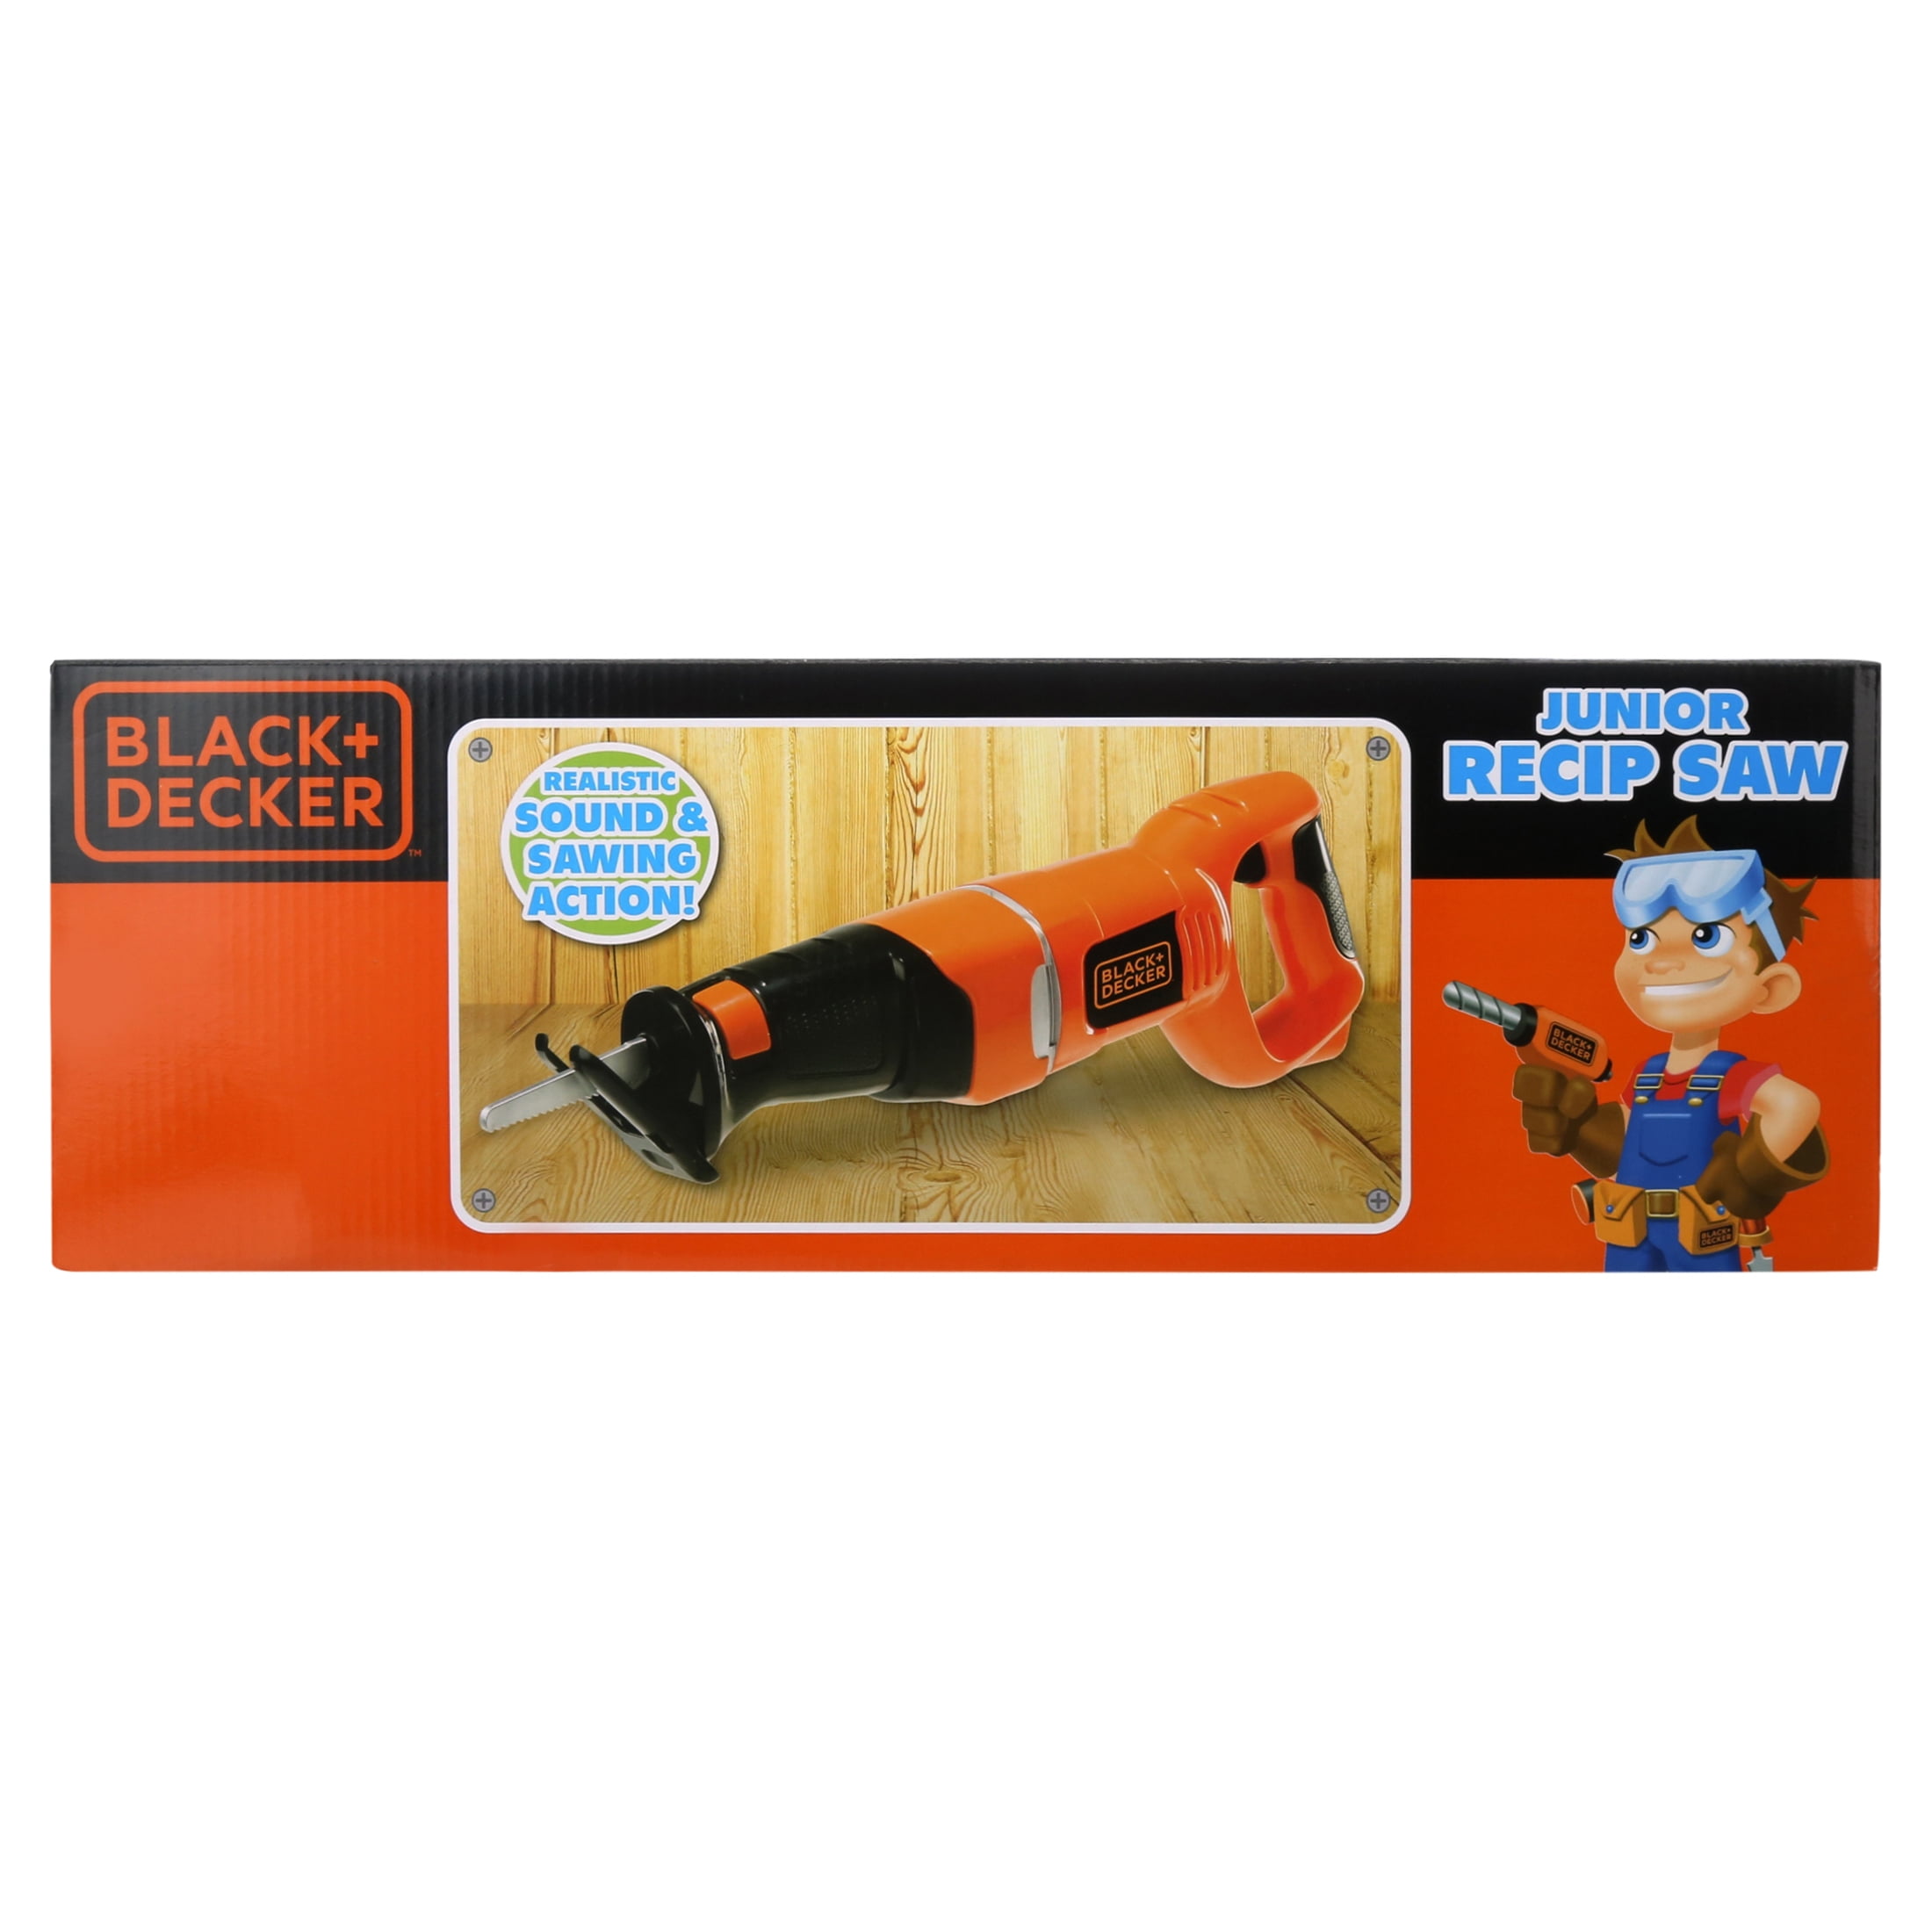 HSB-toys BLACK & DECKER Junior leaf blower tools try me realistic